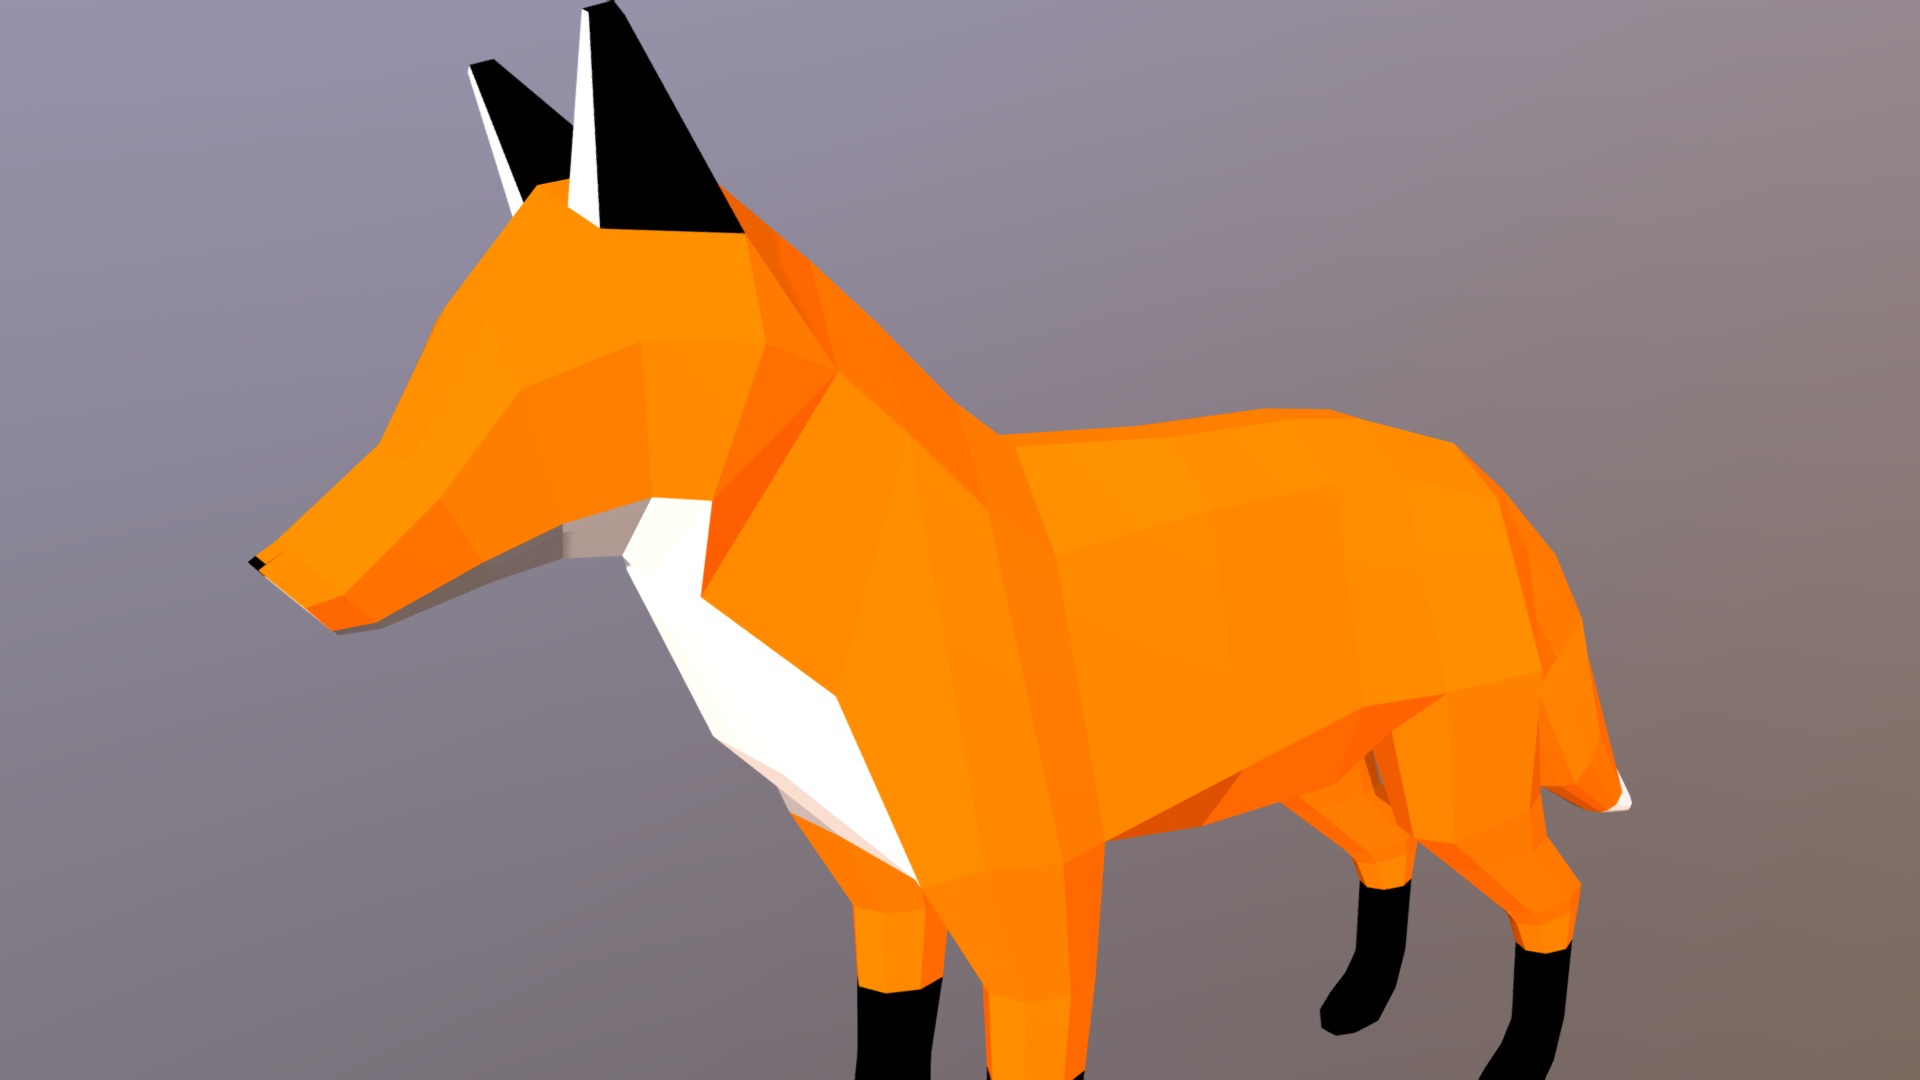 Making fox. Low Poly Fox 3d model. Лиса Low Poly. Лоу Поли лиса 3д. Модель лисы.